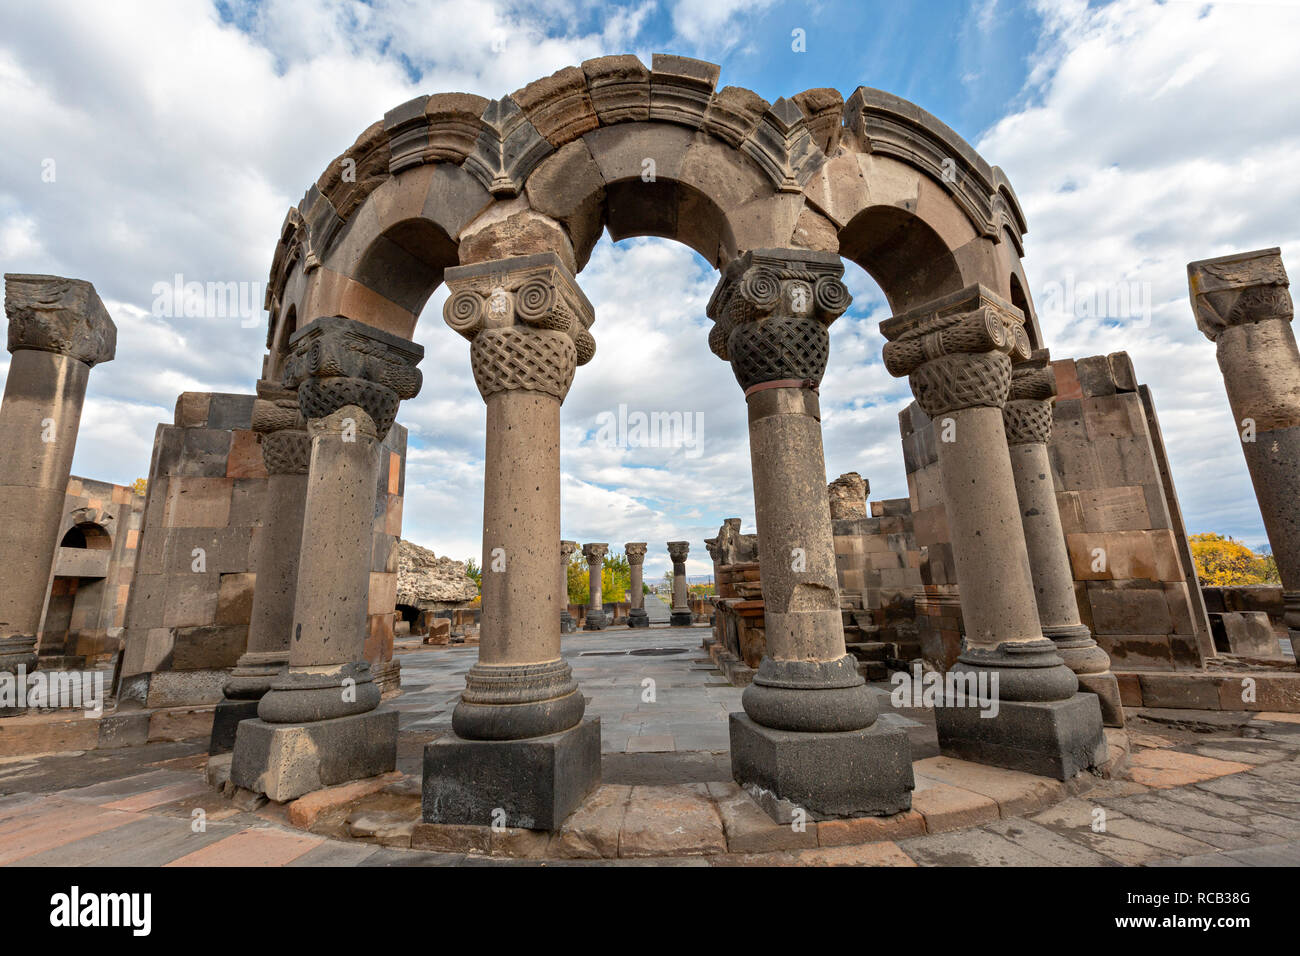 Ruins of the ancient christan temple of Zvartnots near Yerevan, Armenia. Stock Photo